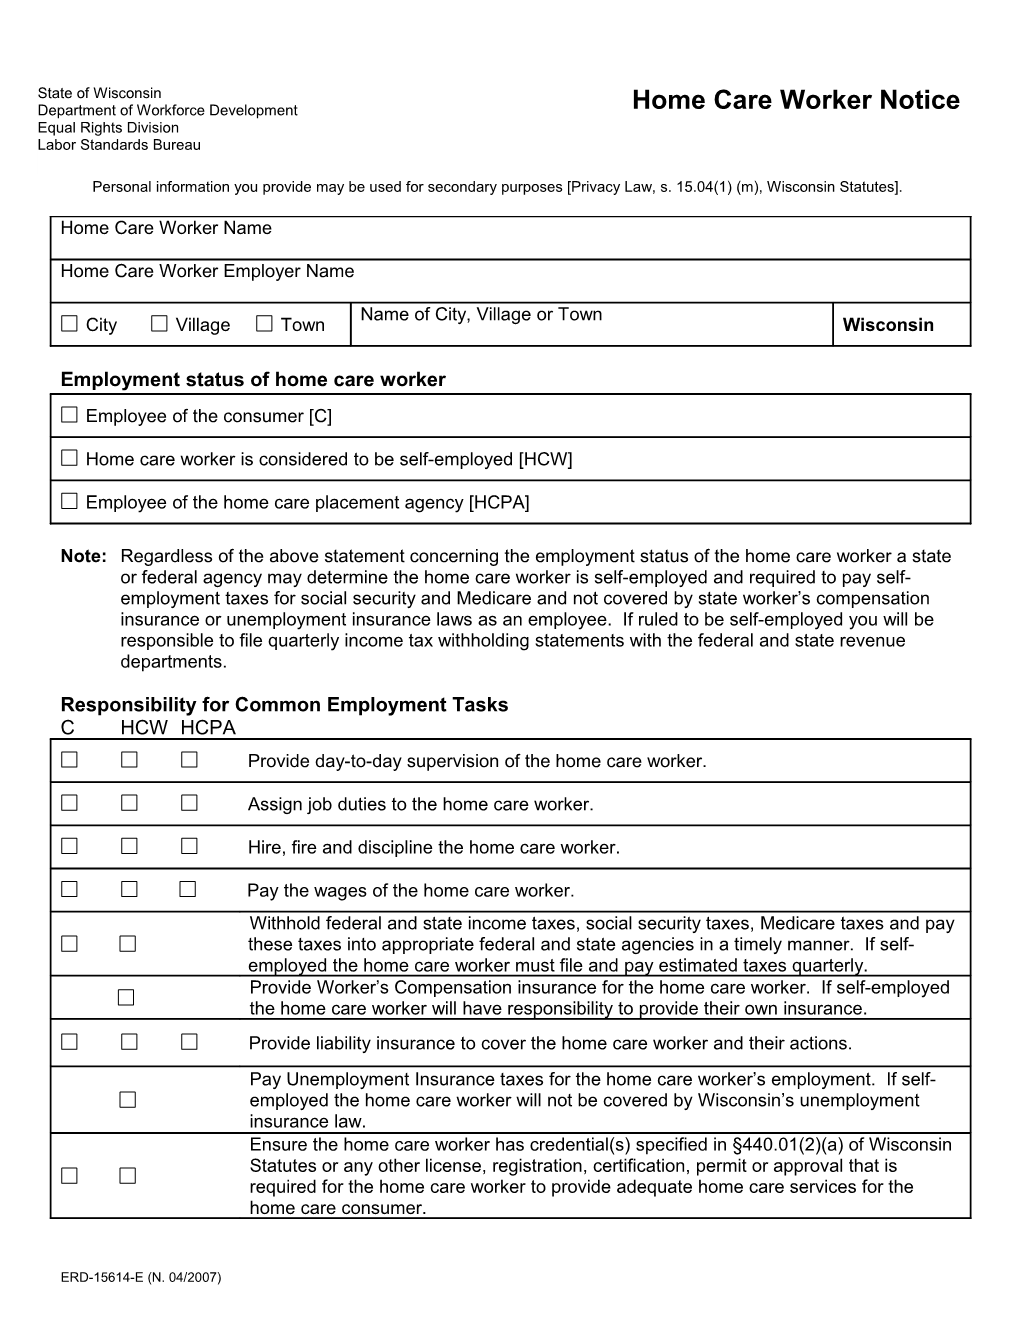 ERD-15614-E, Home Care Worker Notice